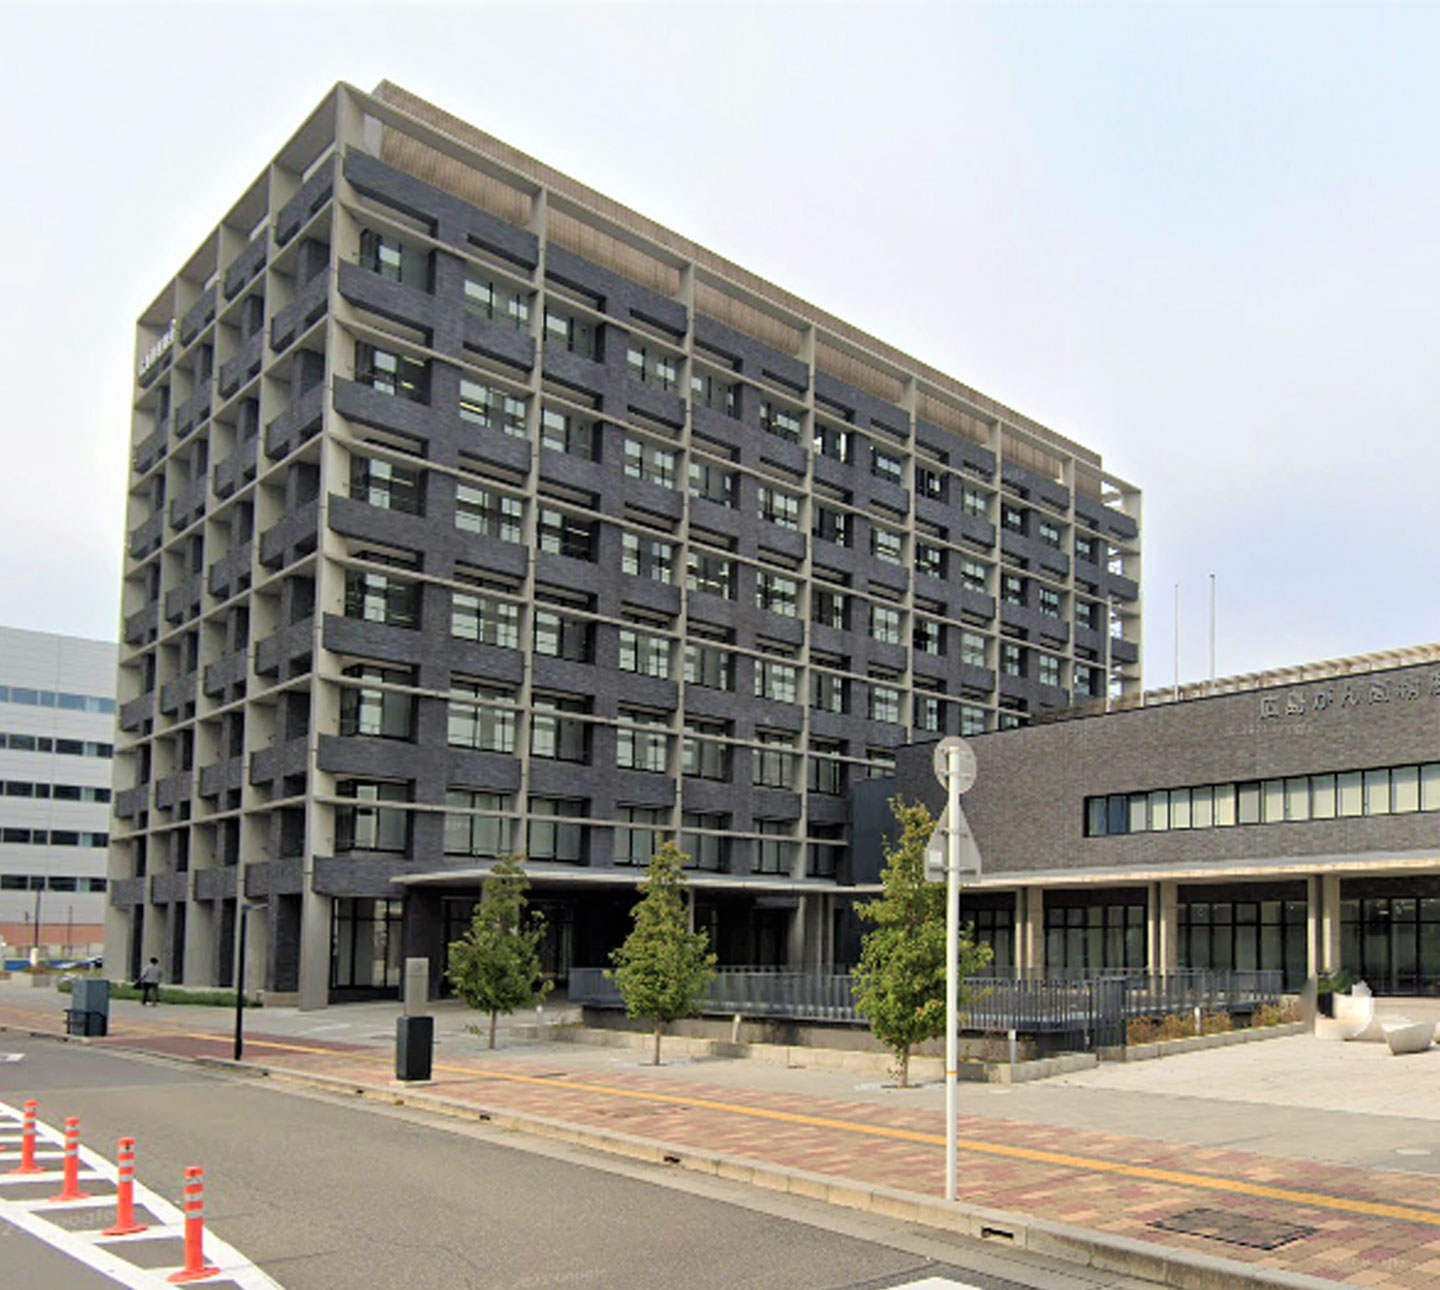 Exterior of Hiroshima Prefectural Medical Association Hall